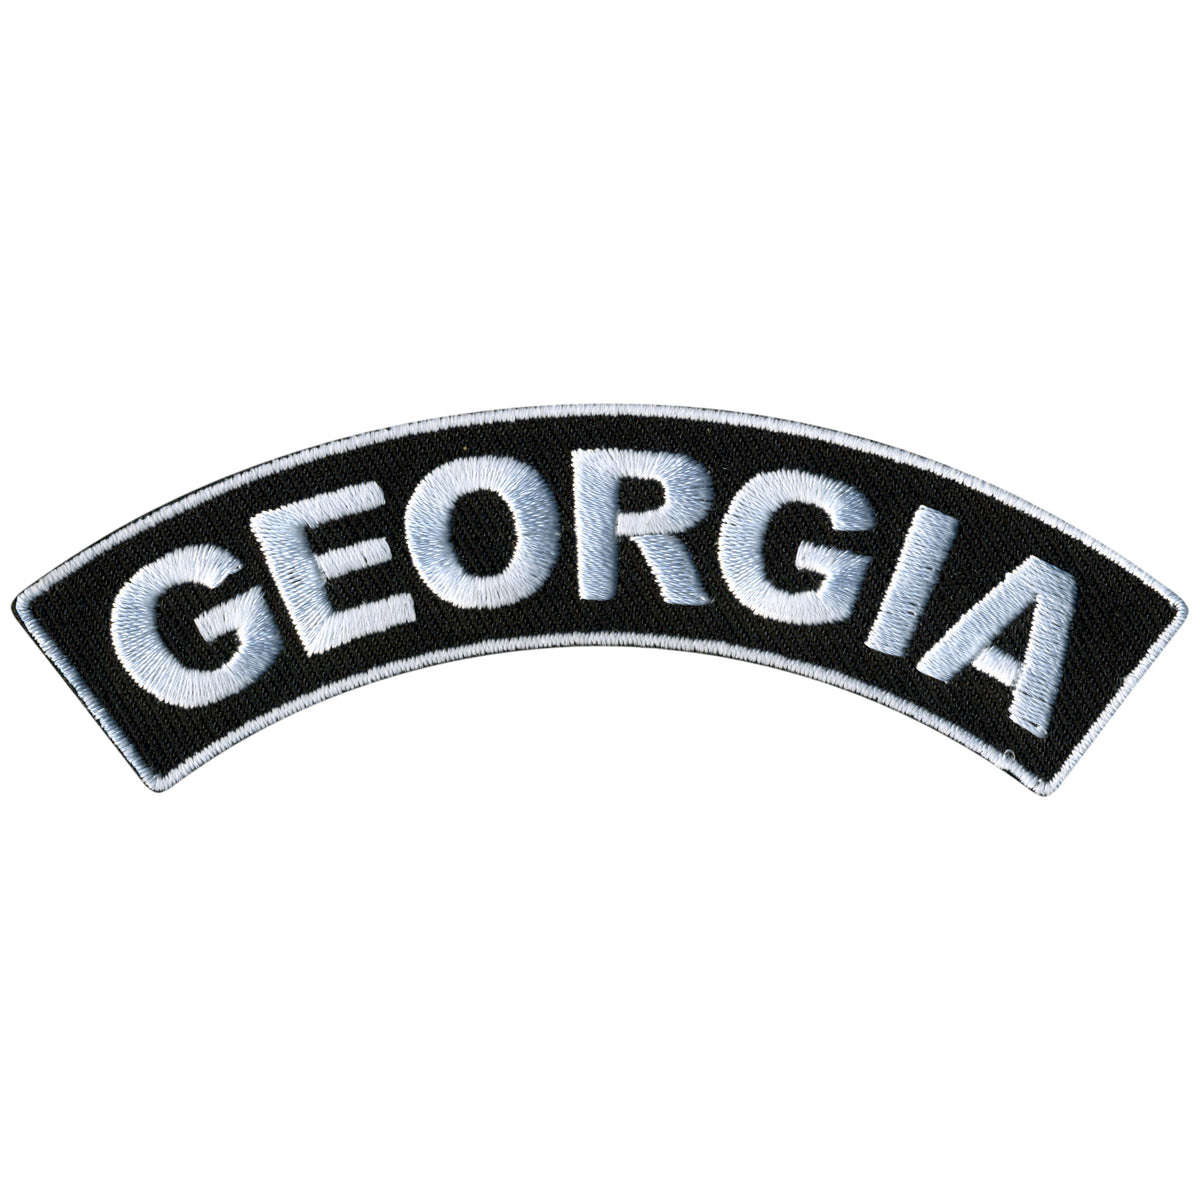 Hot Leathers Georgia 4” X 1” Top Rocker Patch